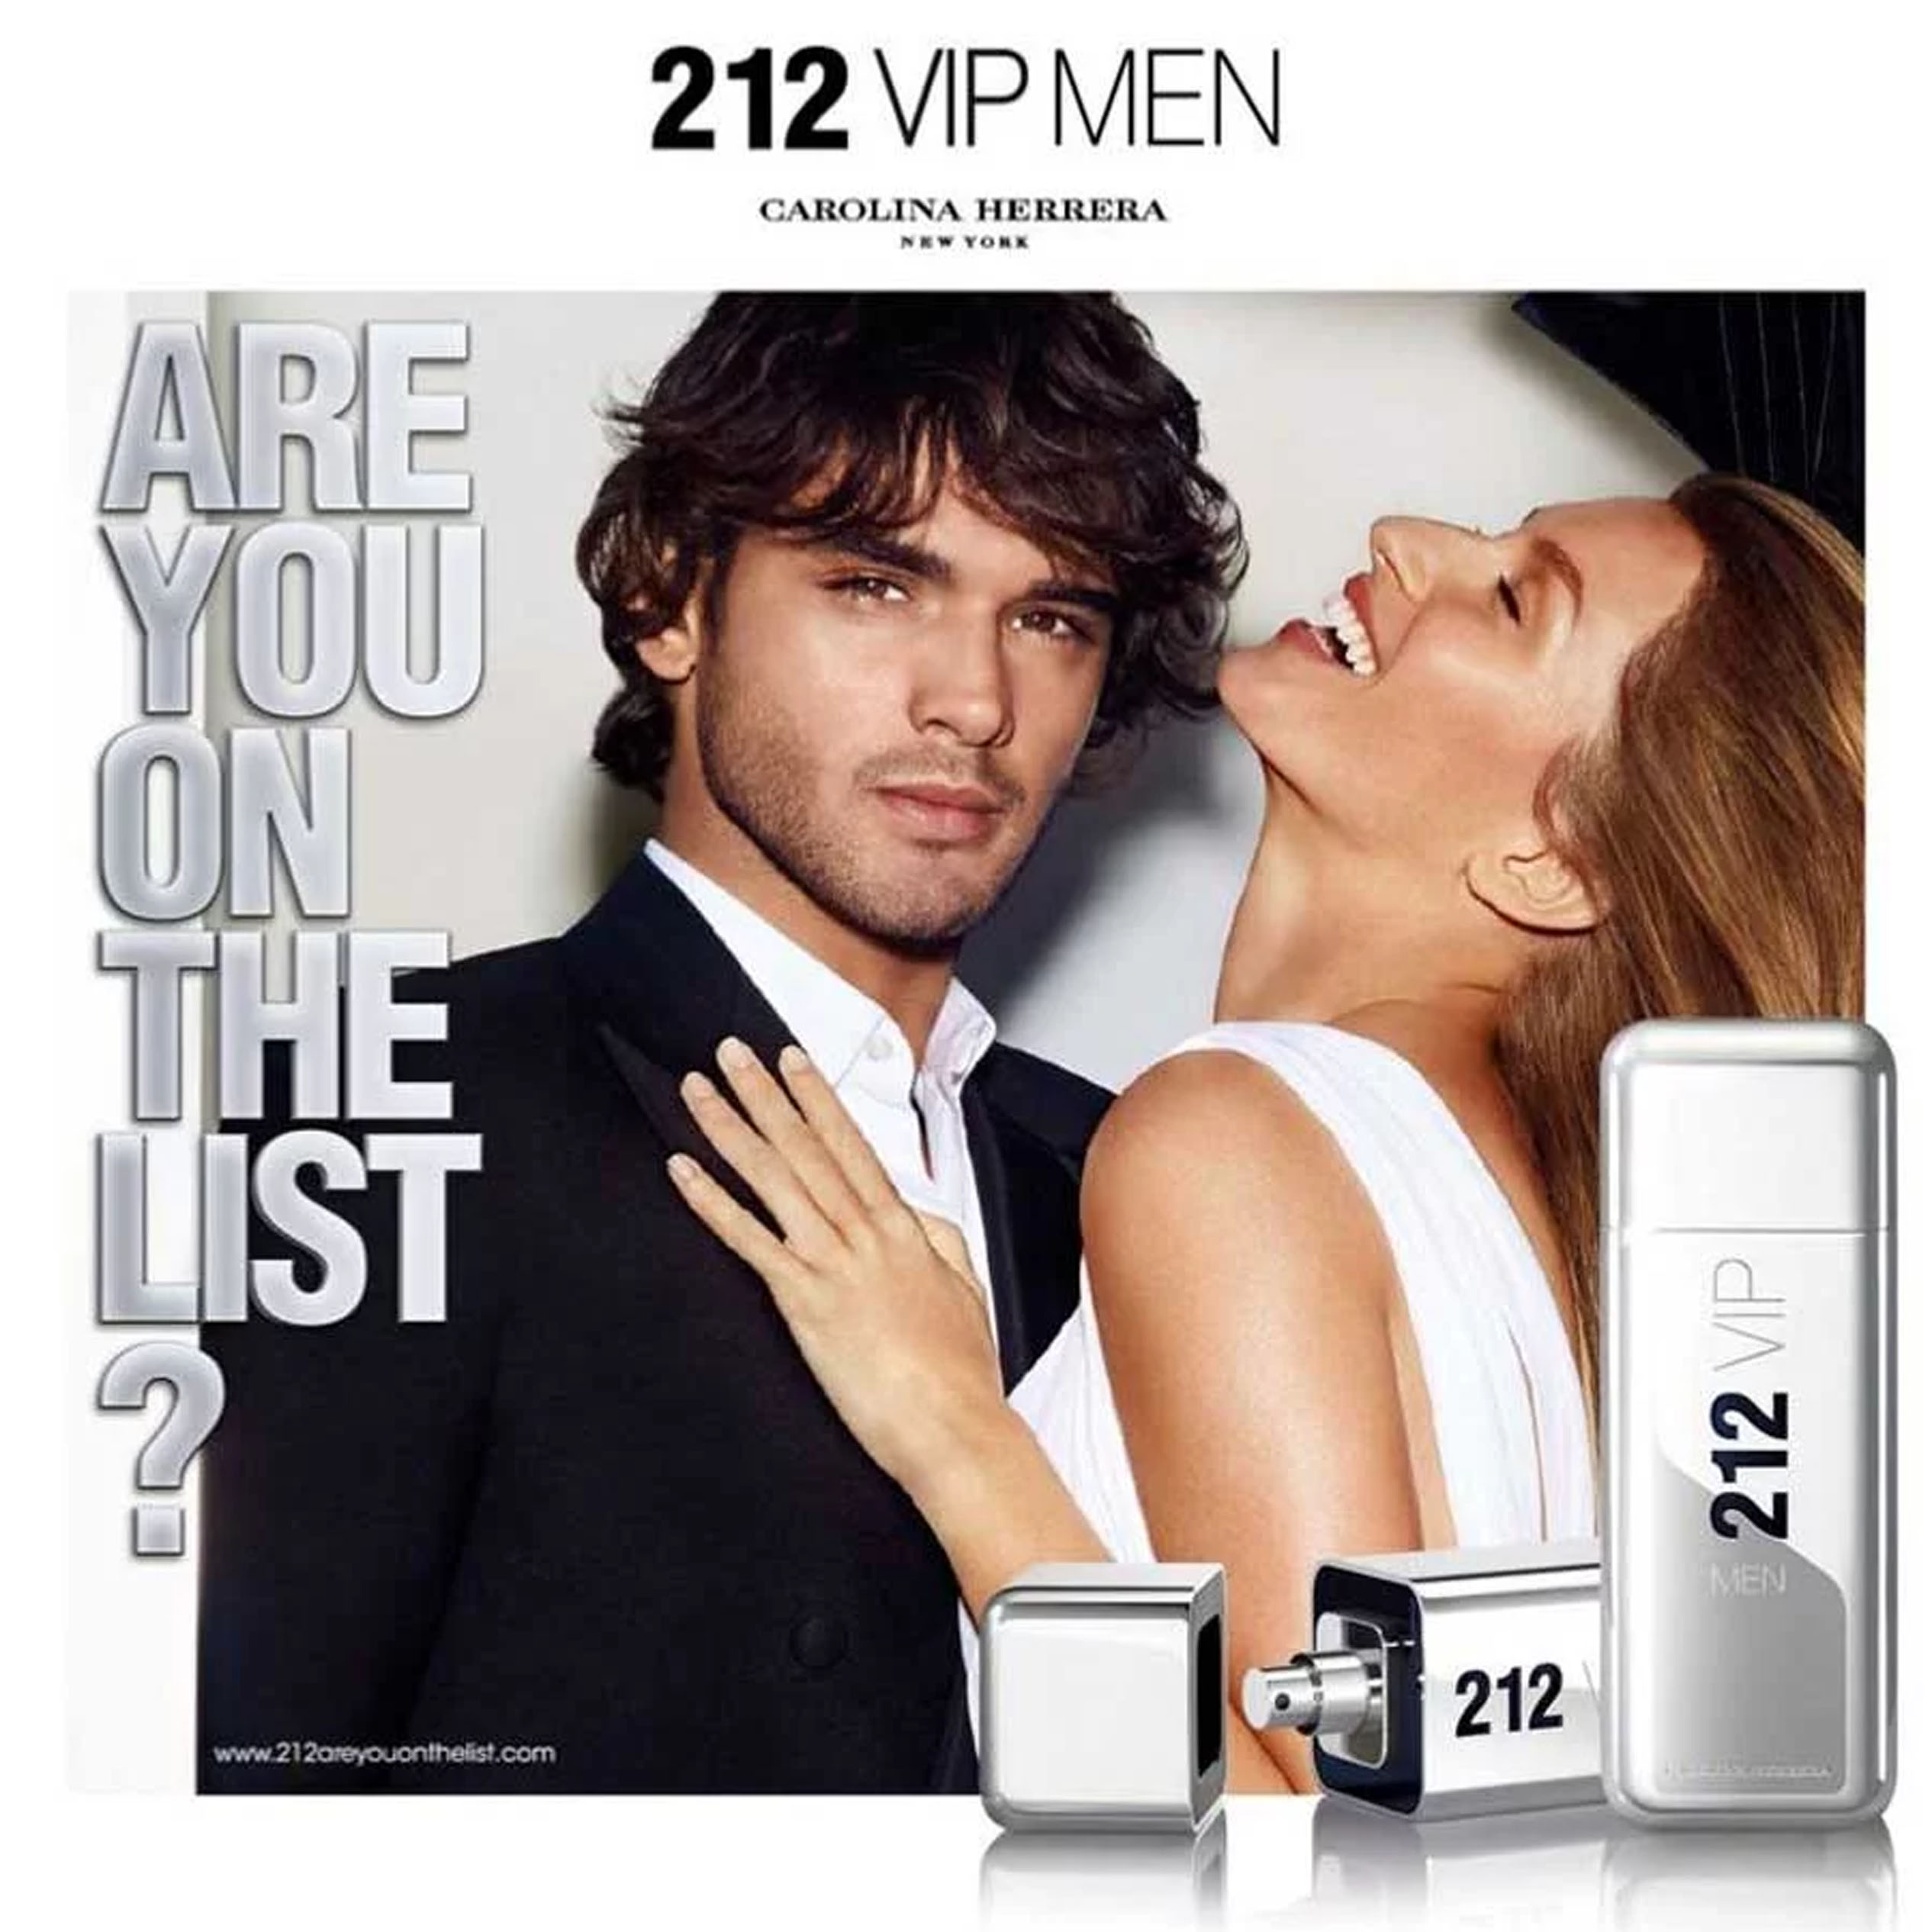 Perfume 212 Vip Men Carolina Herrera   (Replica Con Fragancia Importada)- Hombre